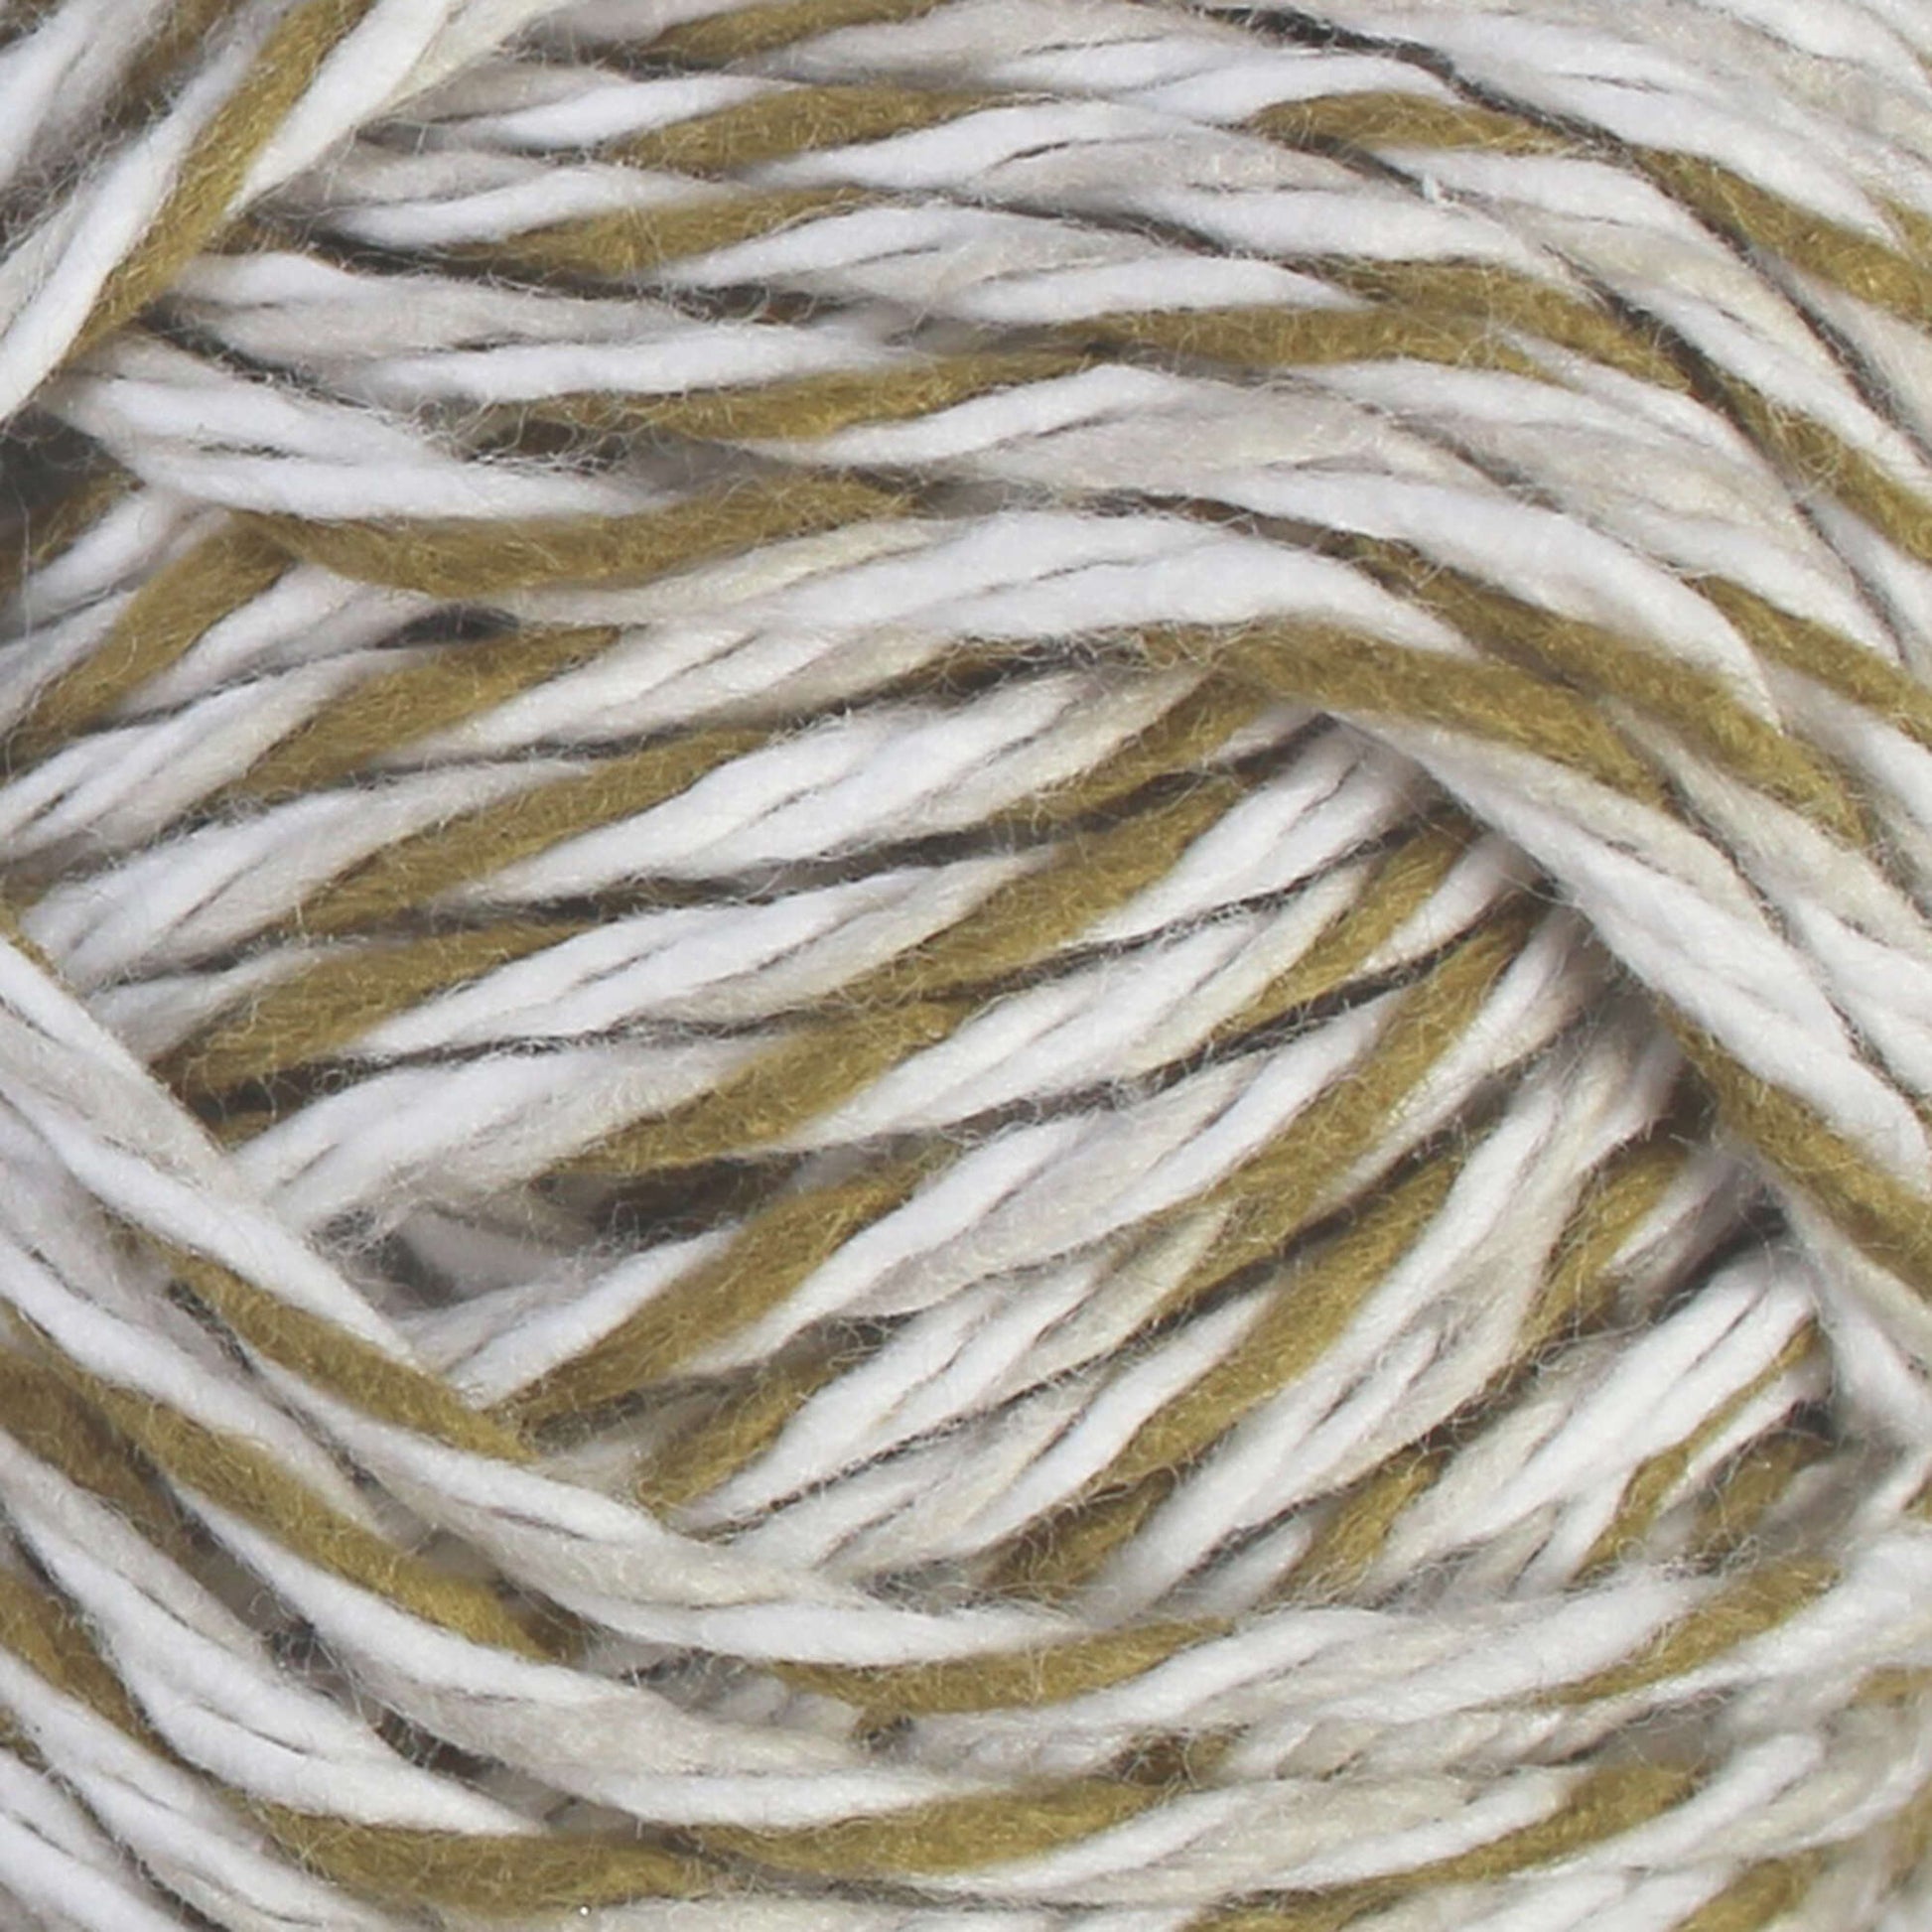 Bernat Handicrafter Cotton Twists Yarn - Discontinued Shades